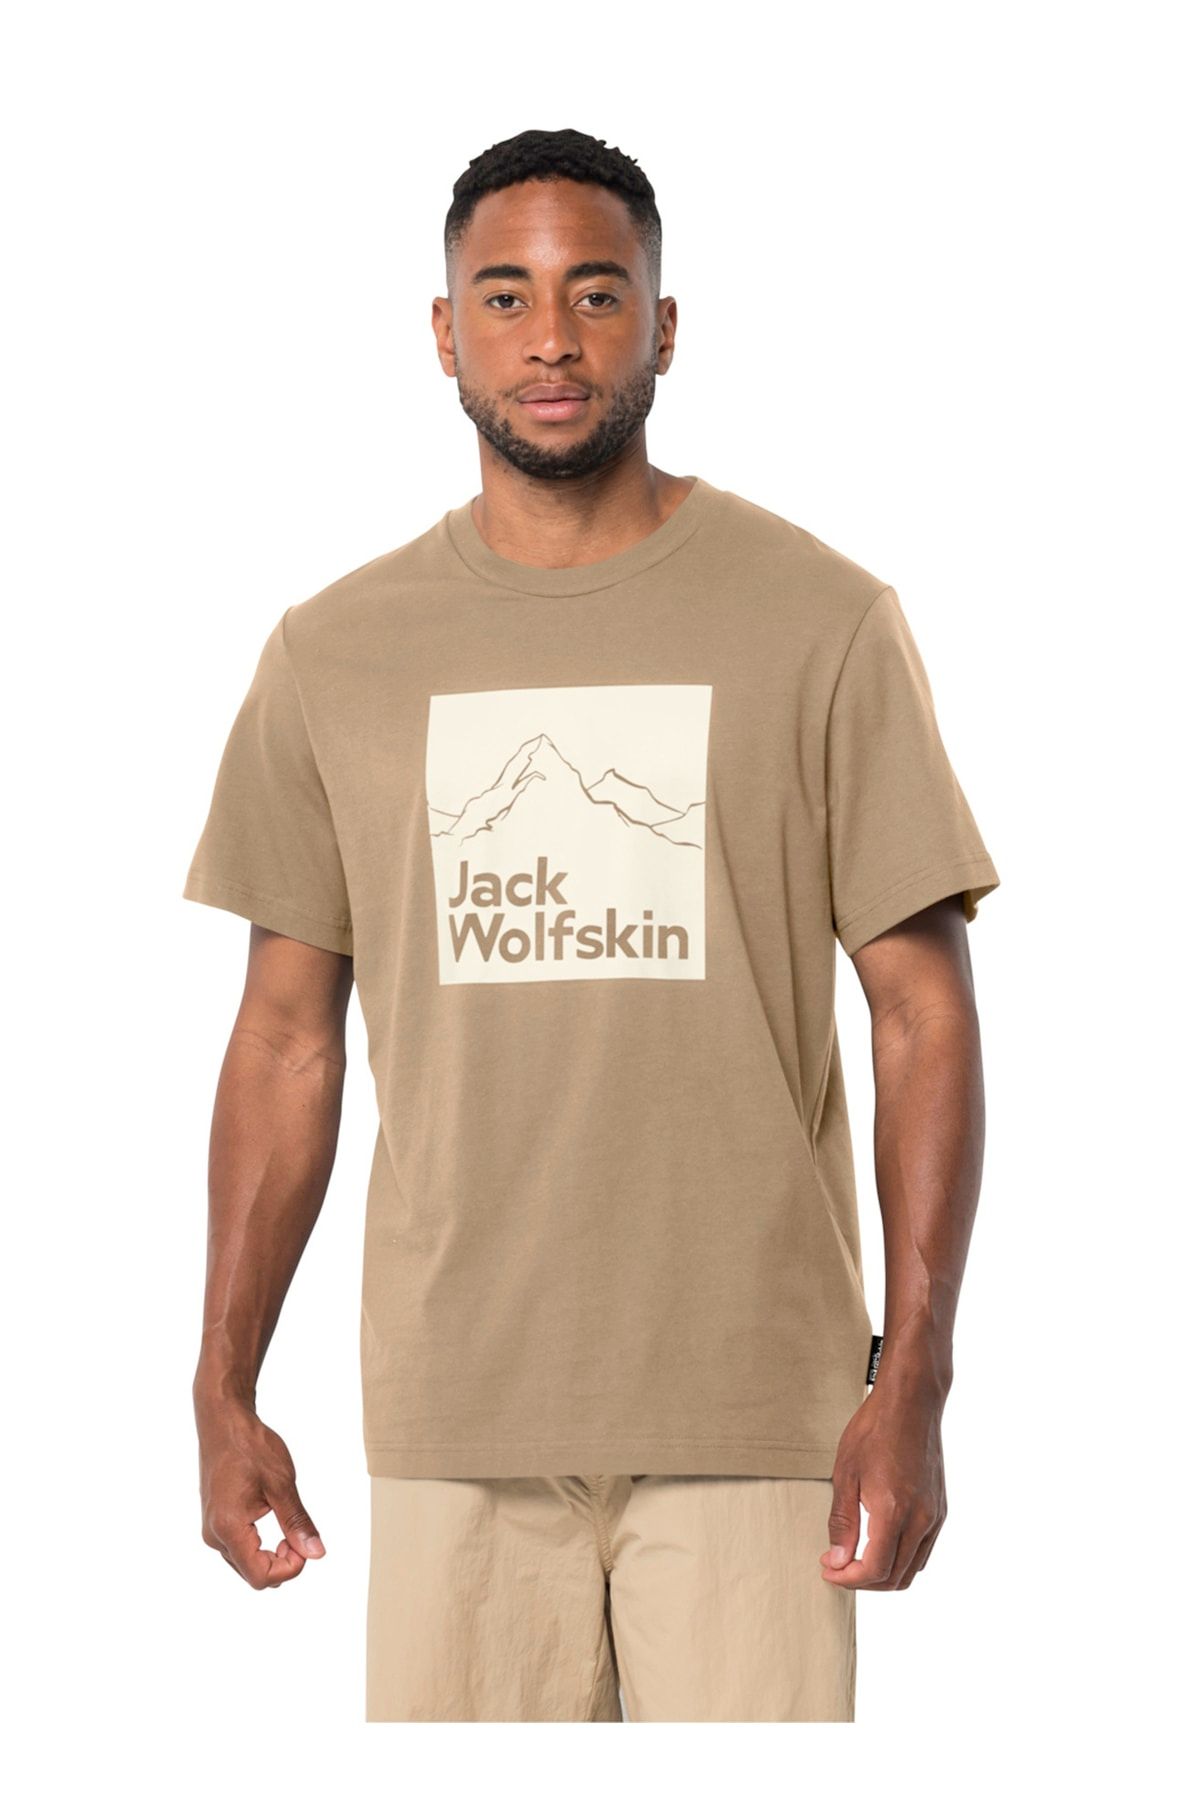 Jack Wolfskin Bisiklet Yaka Baskılı Bej Erkek T-shirt 1809021_5156 Brand T M